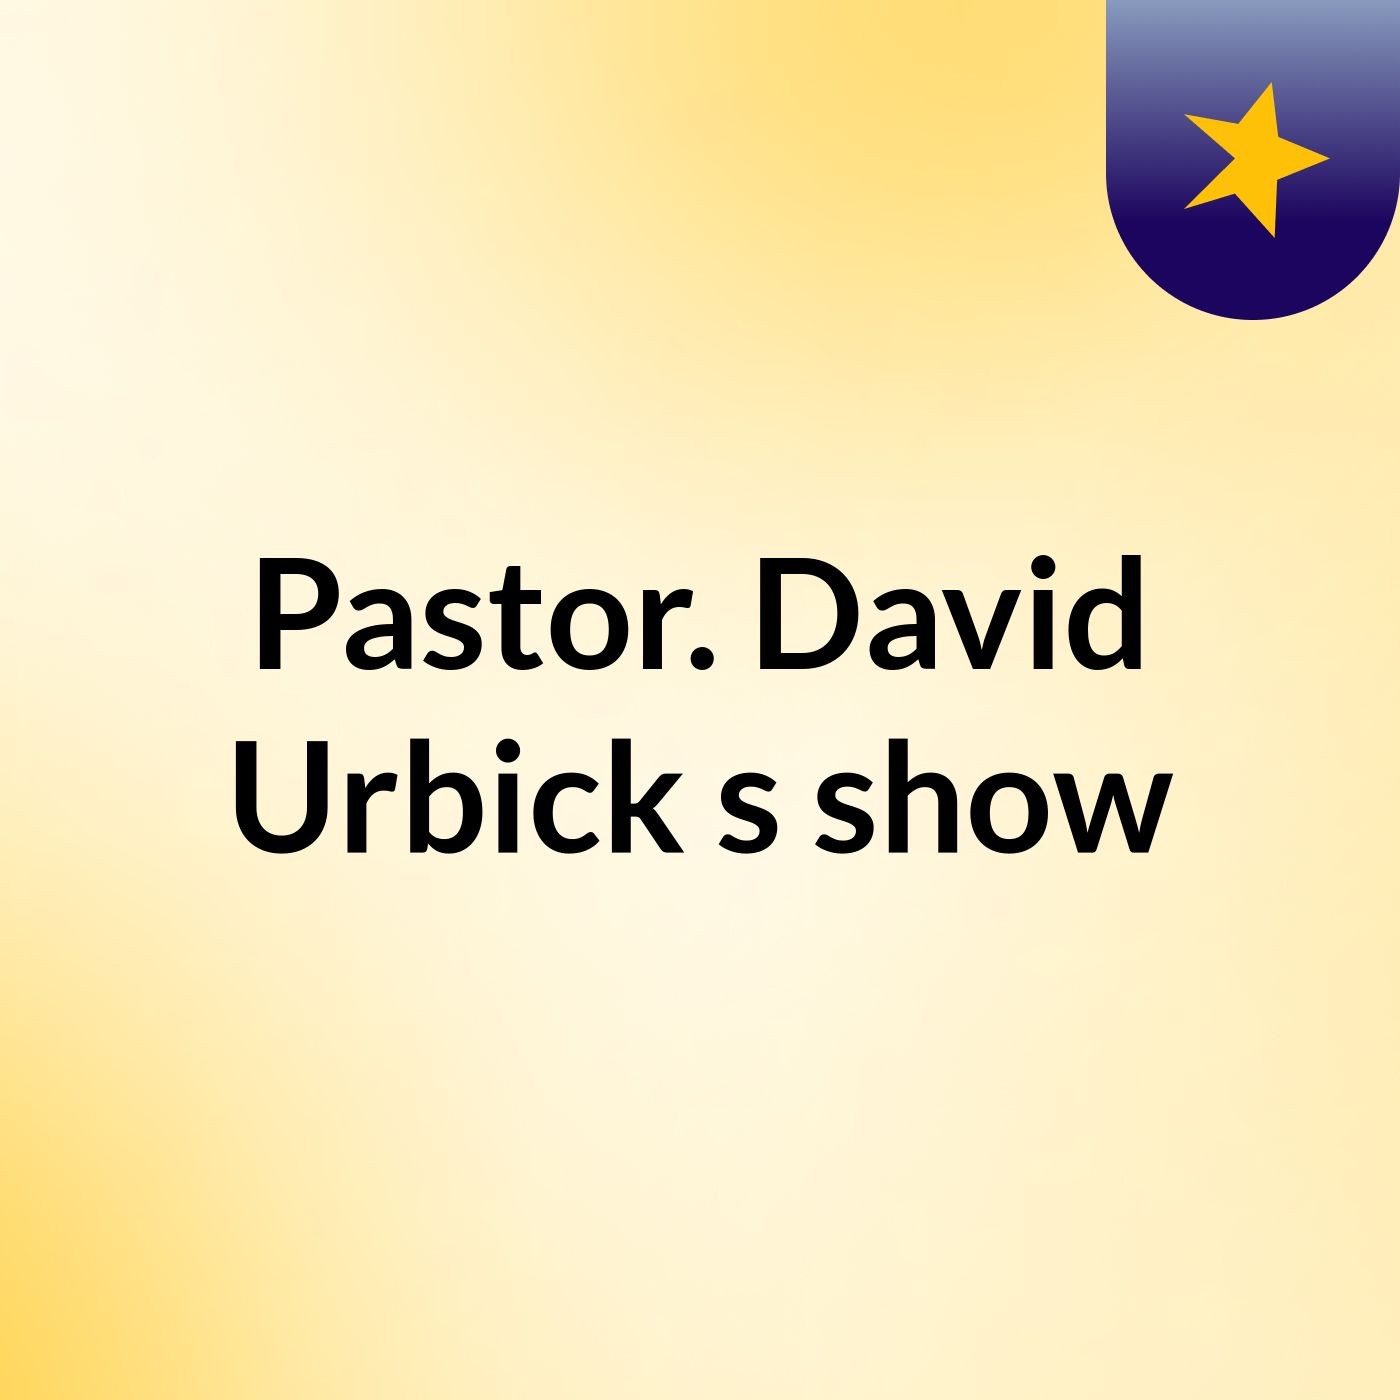 Pastor. David Urbick's show